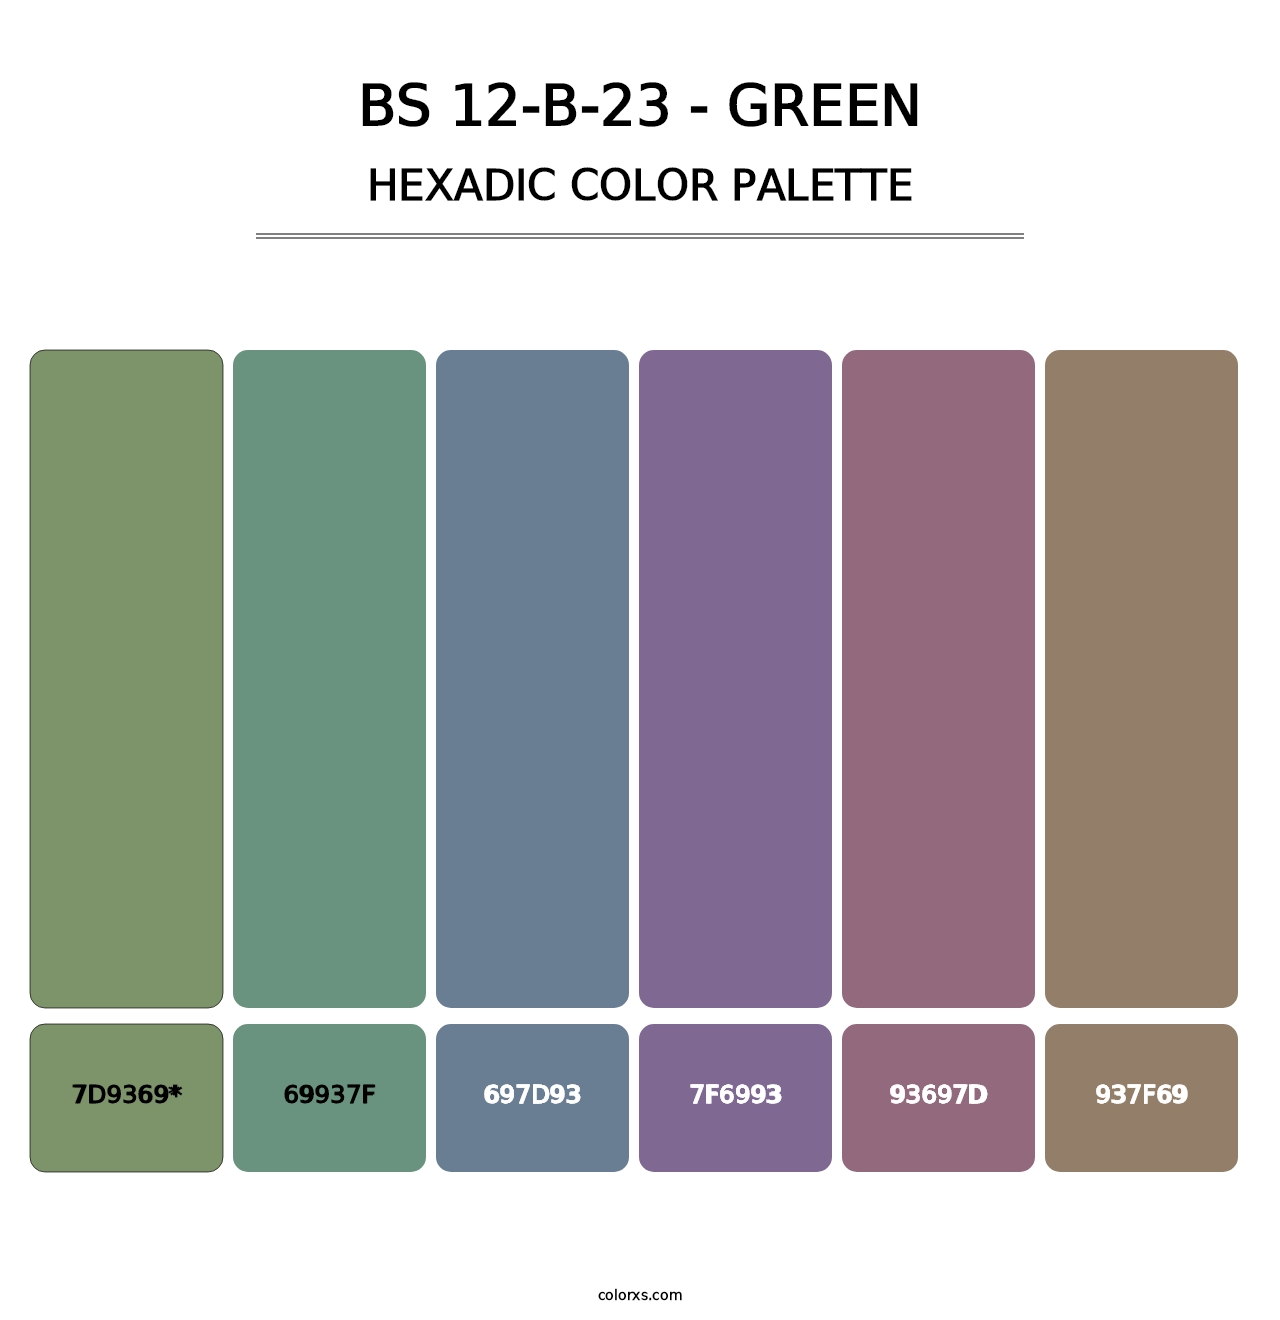 BS 12-B-23 - Green - Hexadic Color Palette